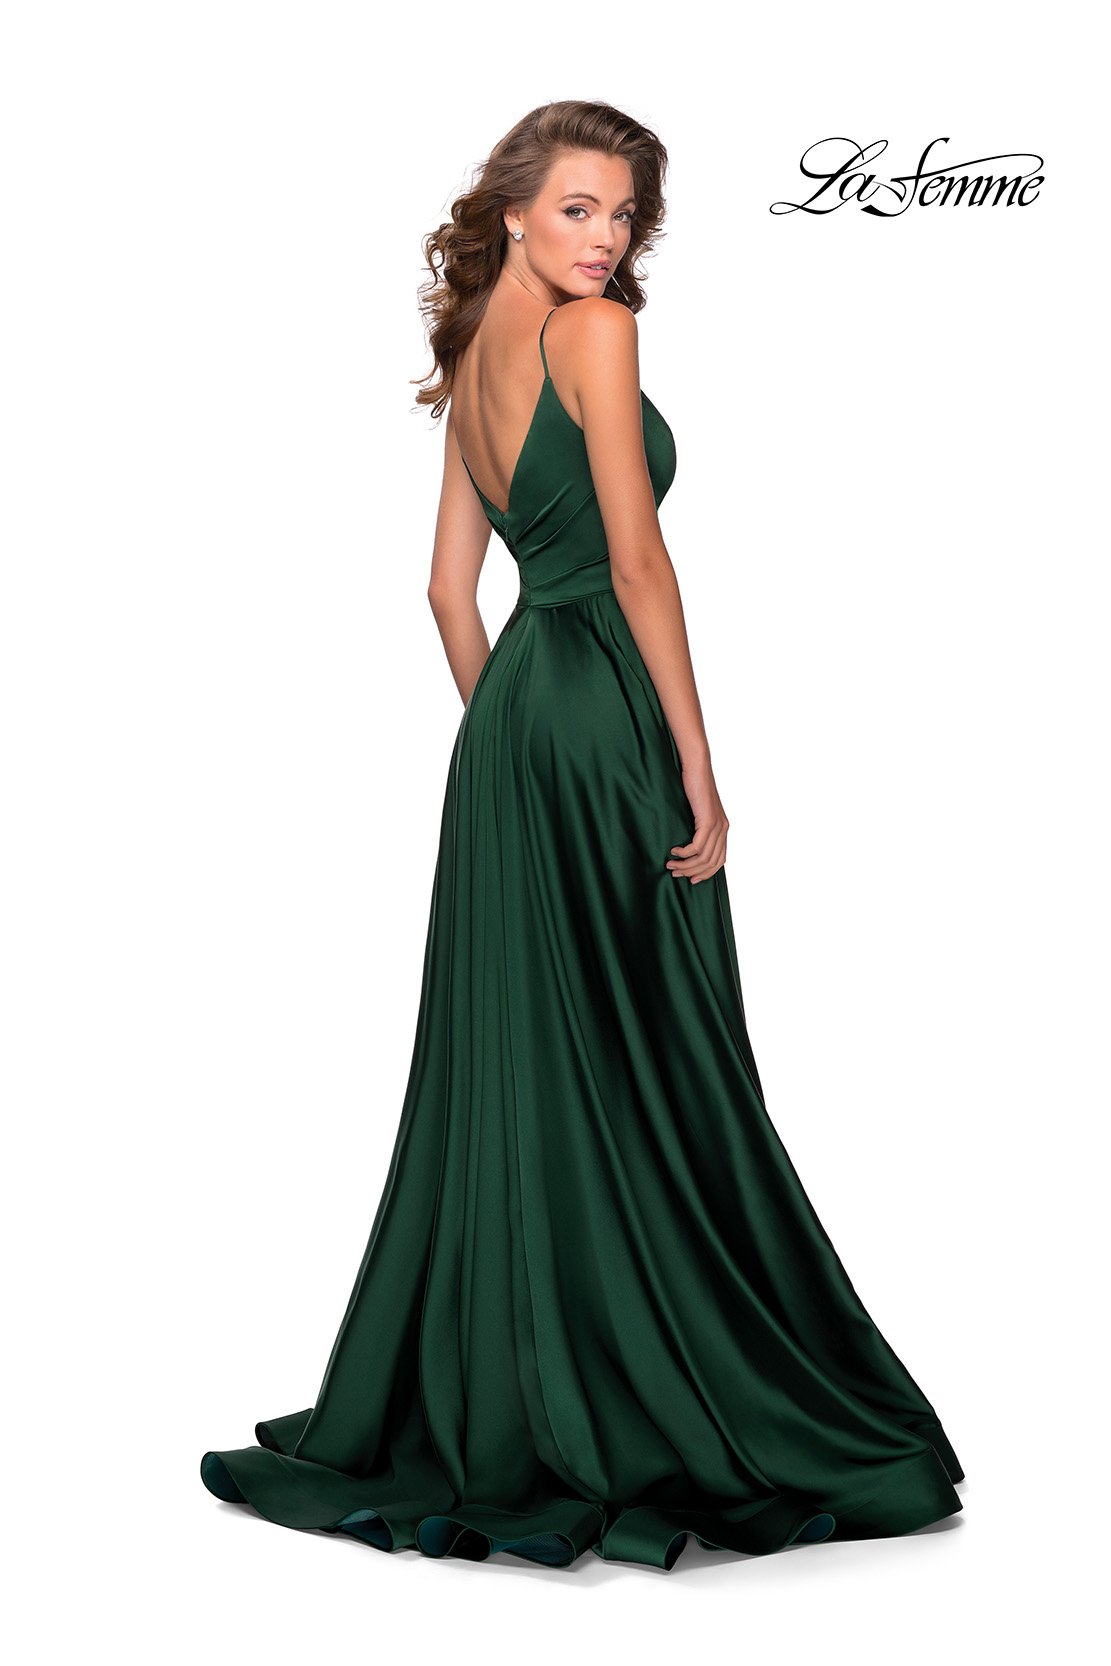 La Femme 28607 dress images in these colors: Emerald, Mauve, Navy, Pale Yellow, Royal Blue, Royal Purple.